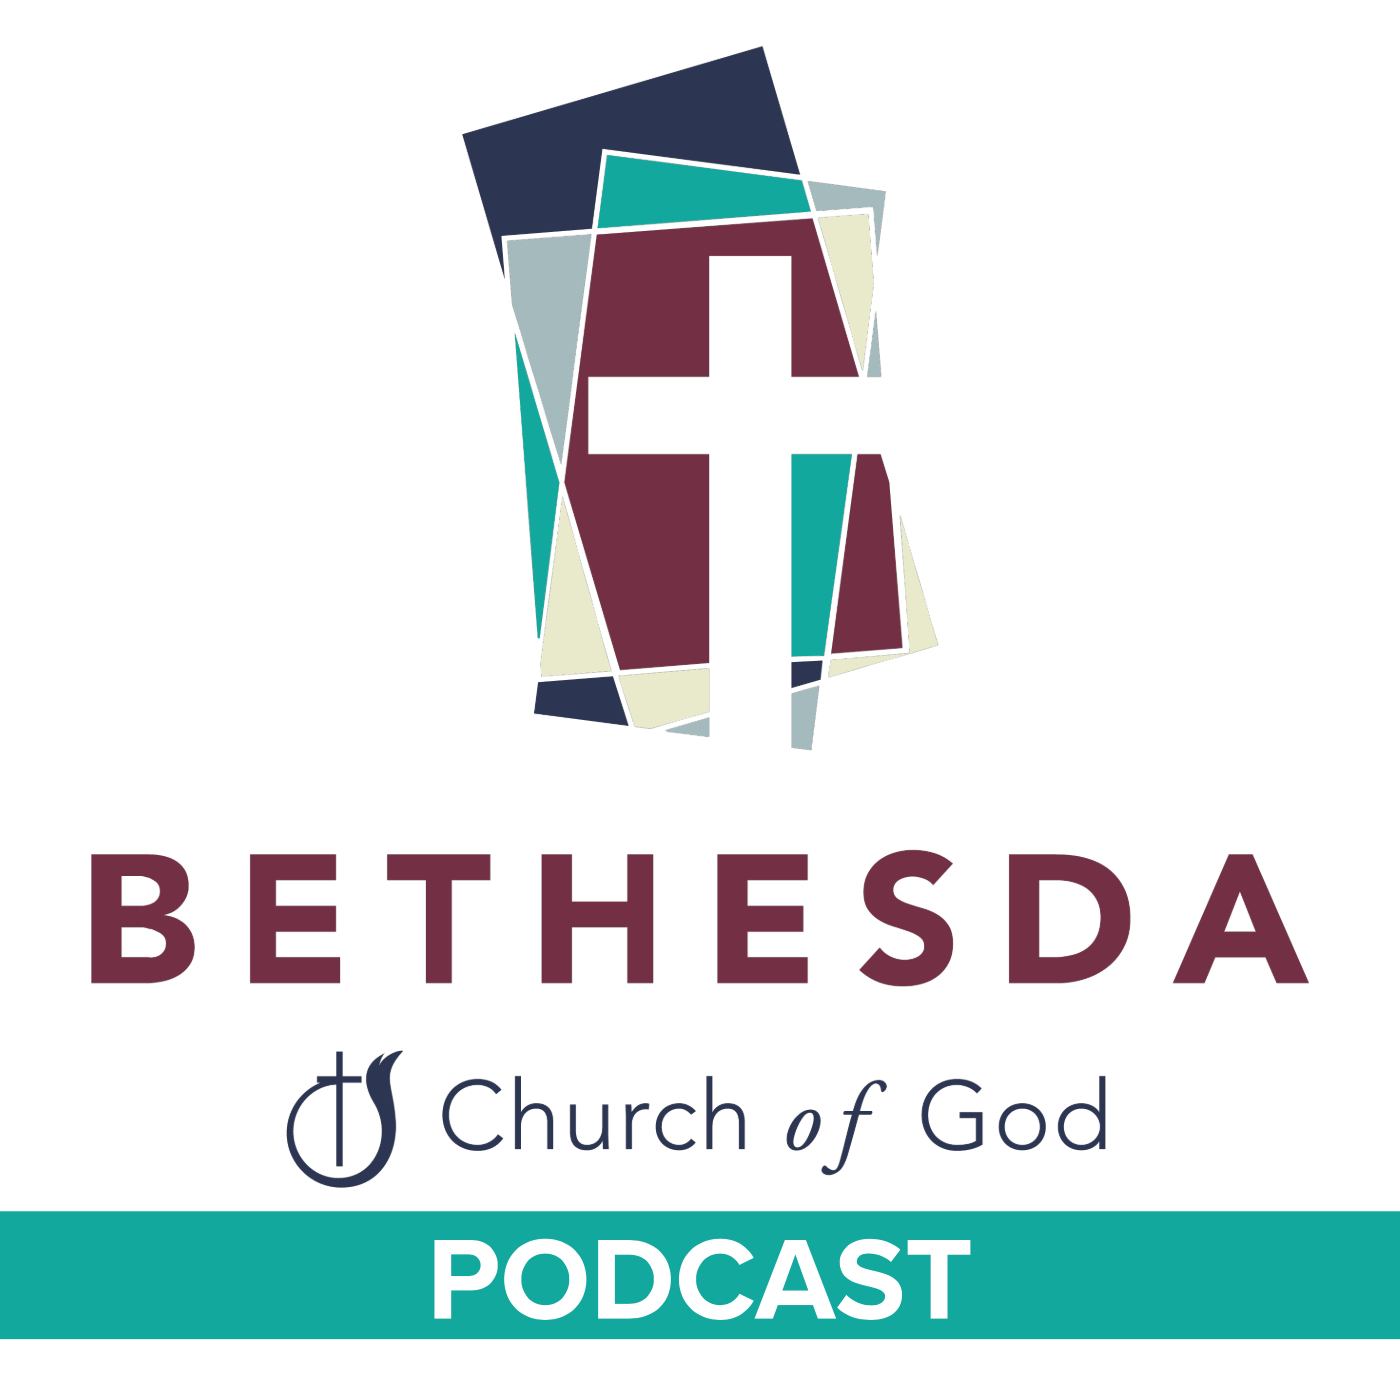 Bethesda Church of God